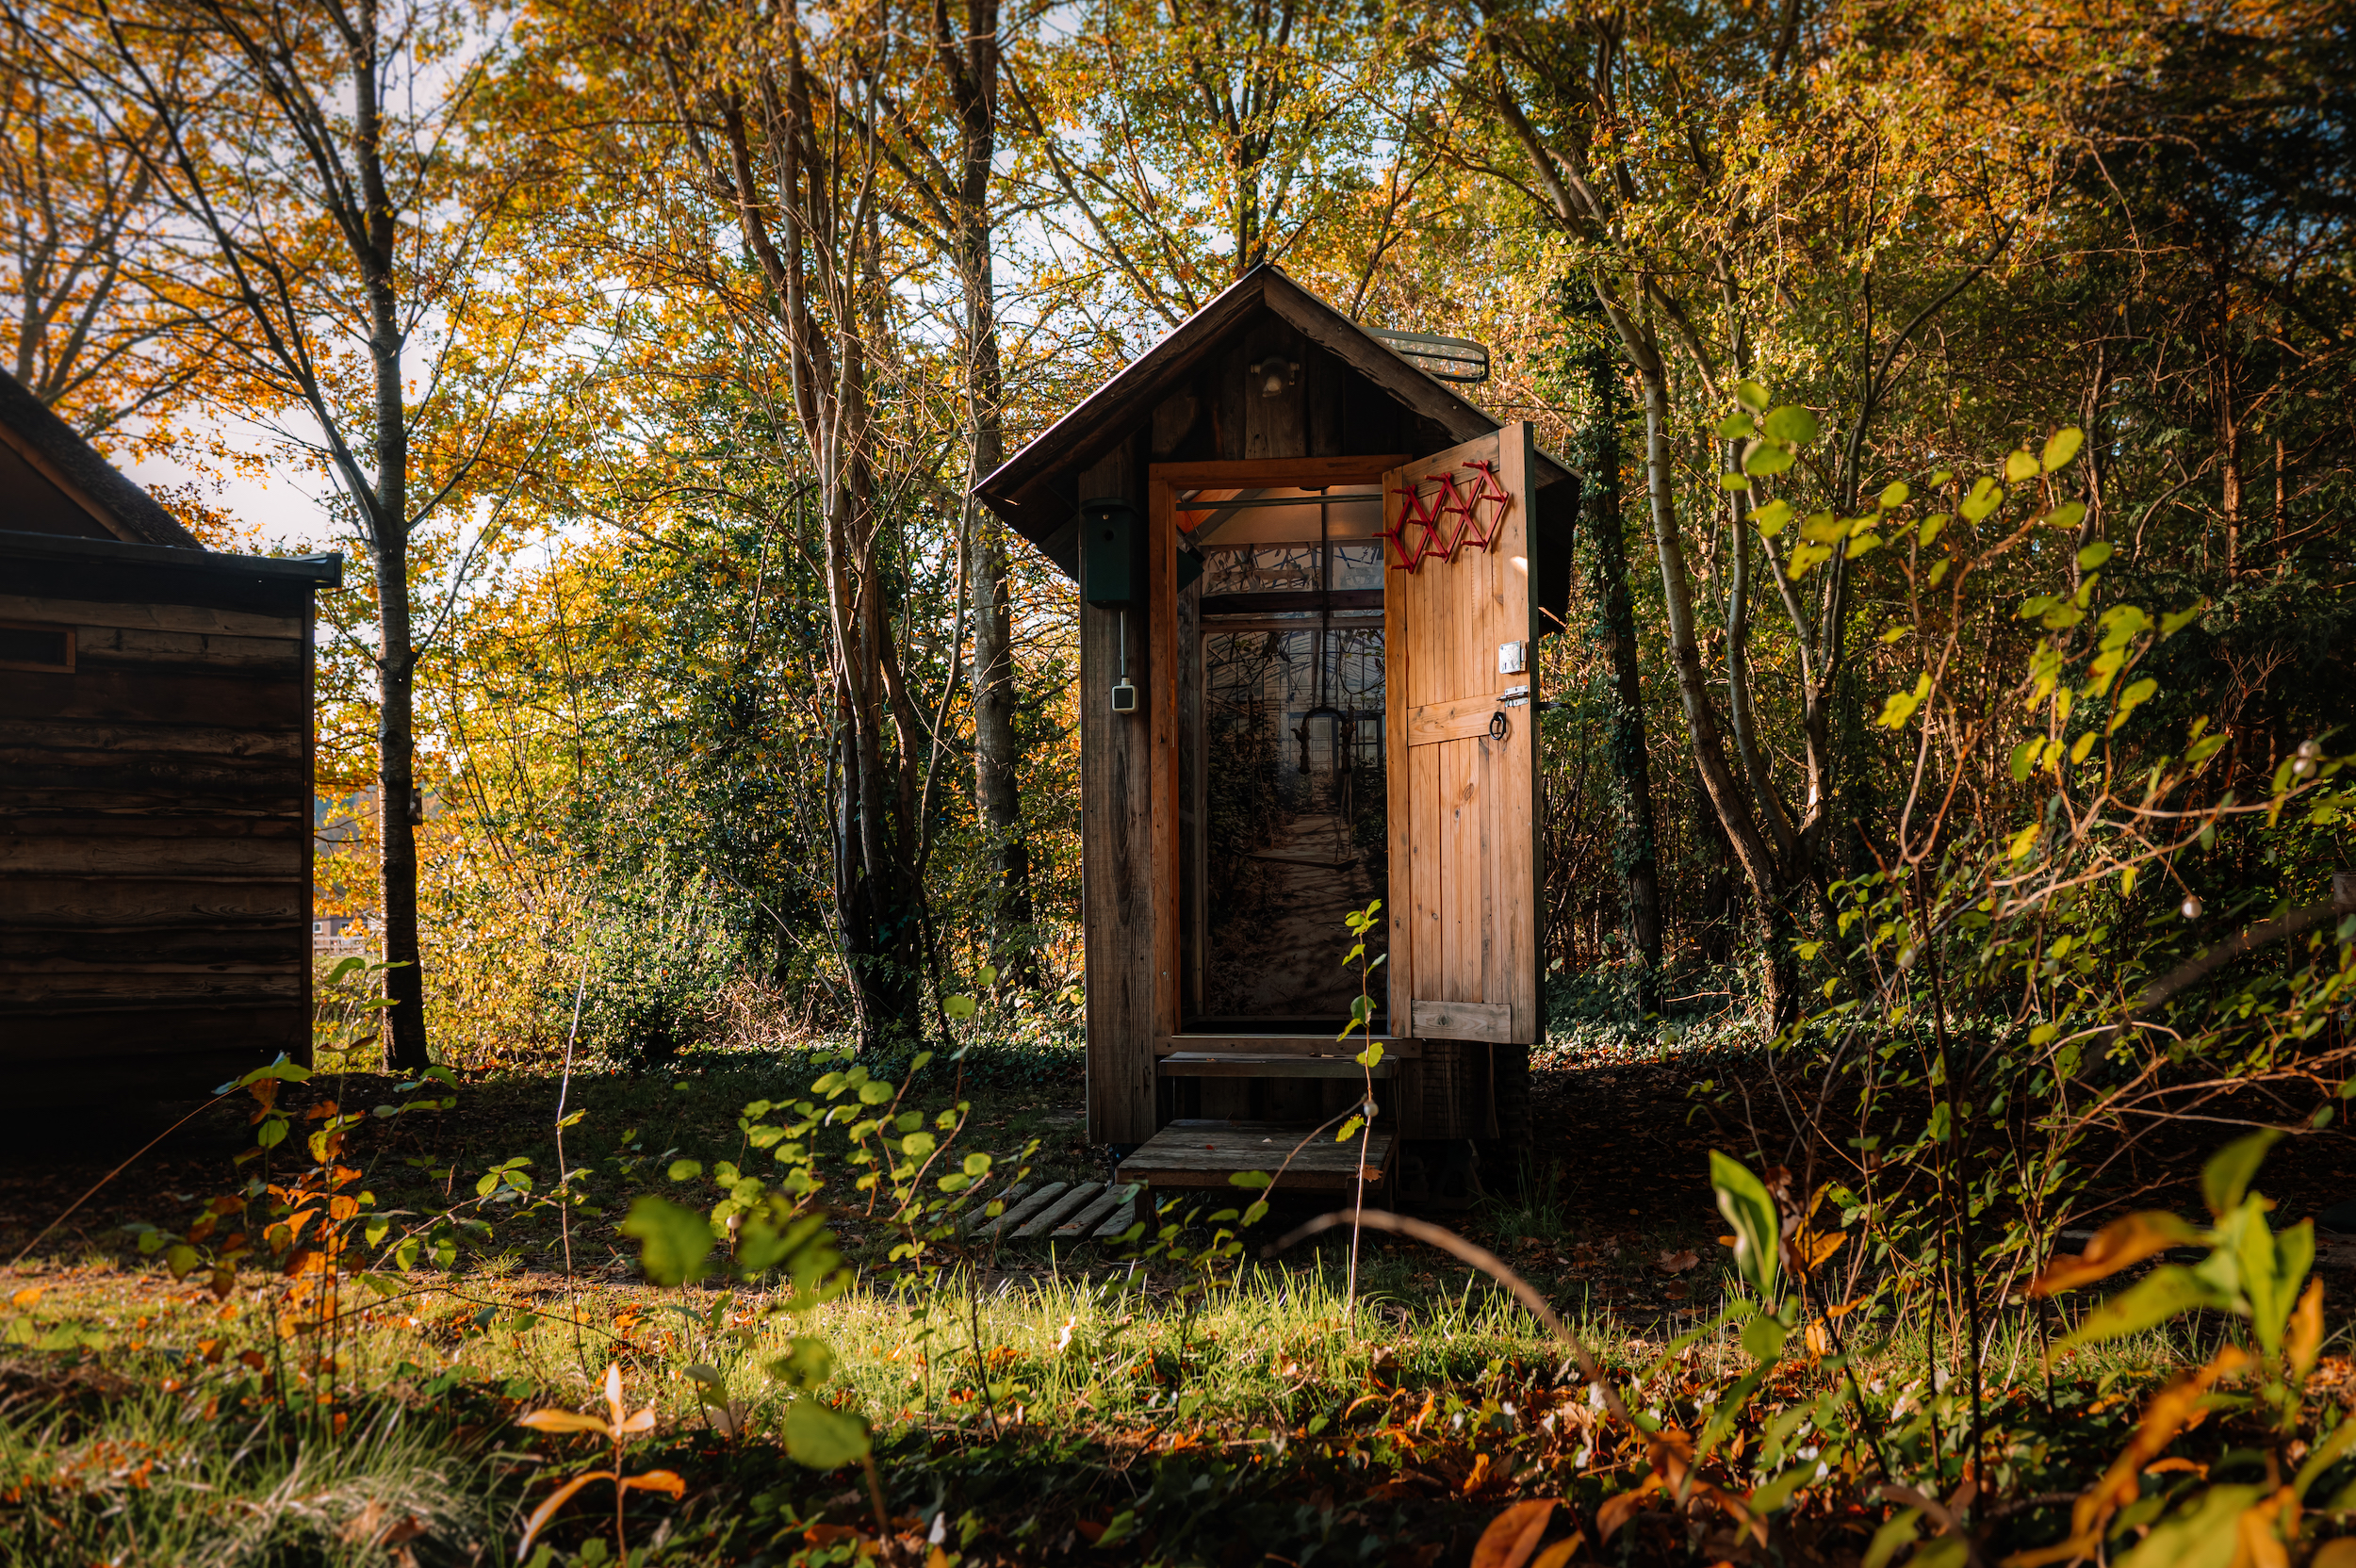 Circular sanitary house on wheels at a campspace